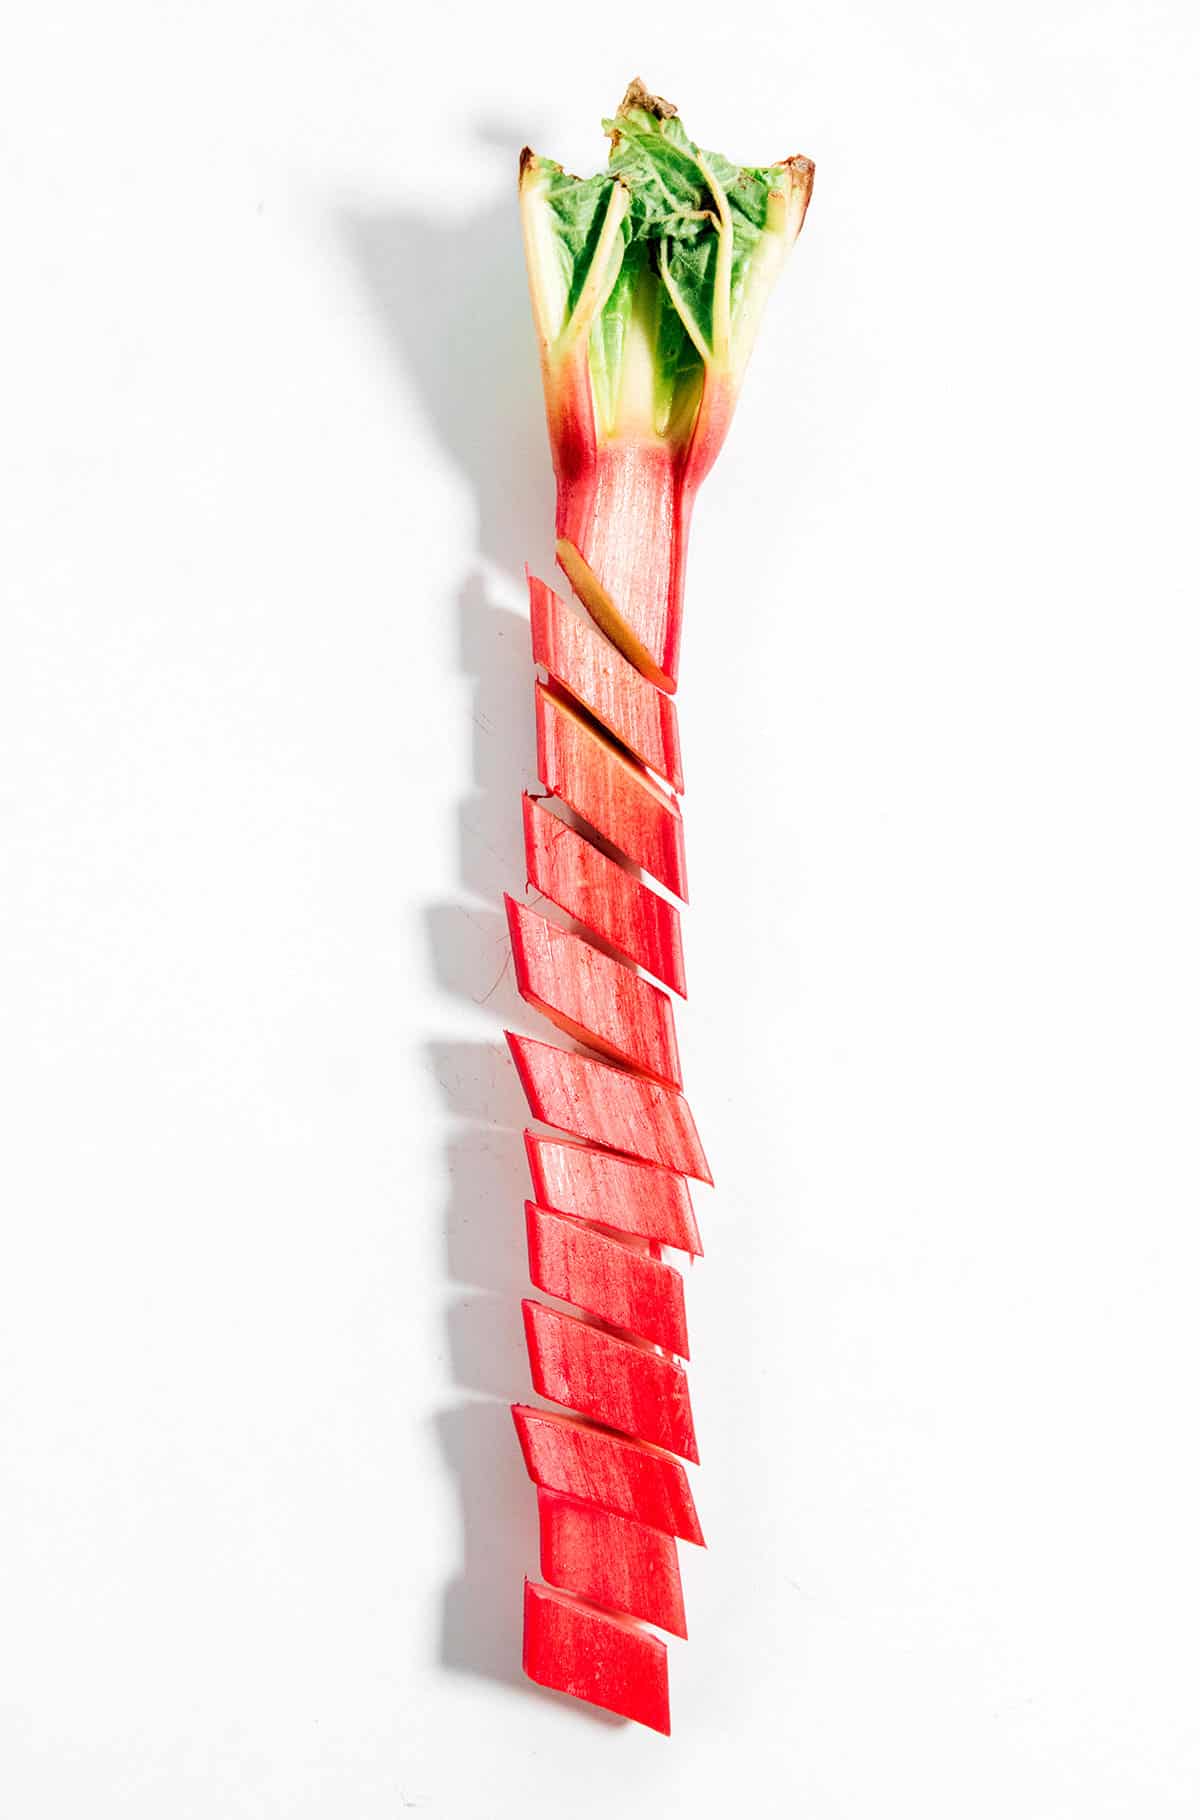 Cutting a rhubarb stalk on a white background.